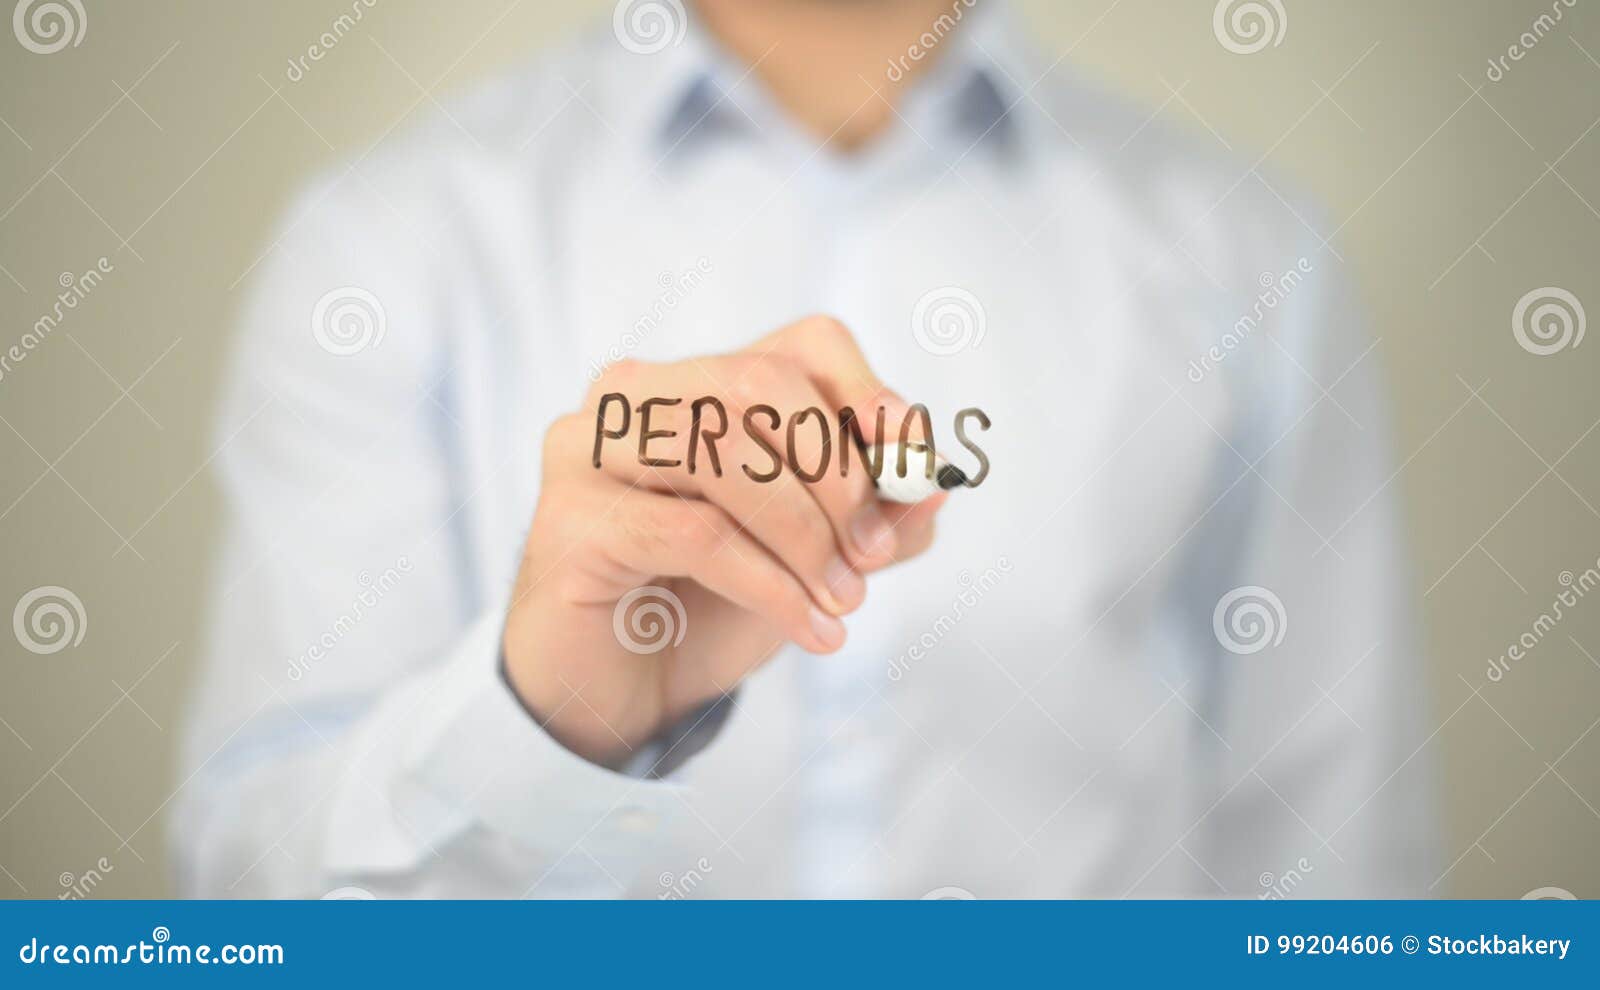 personas , man writing on transparent screen